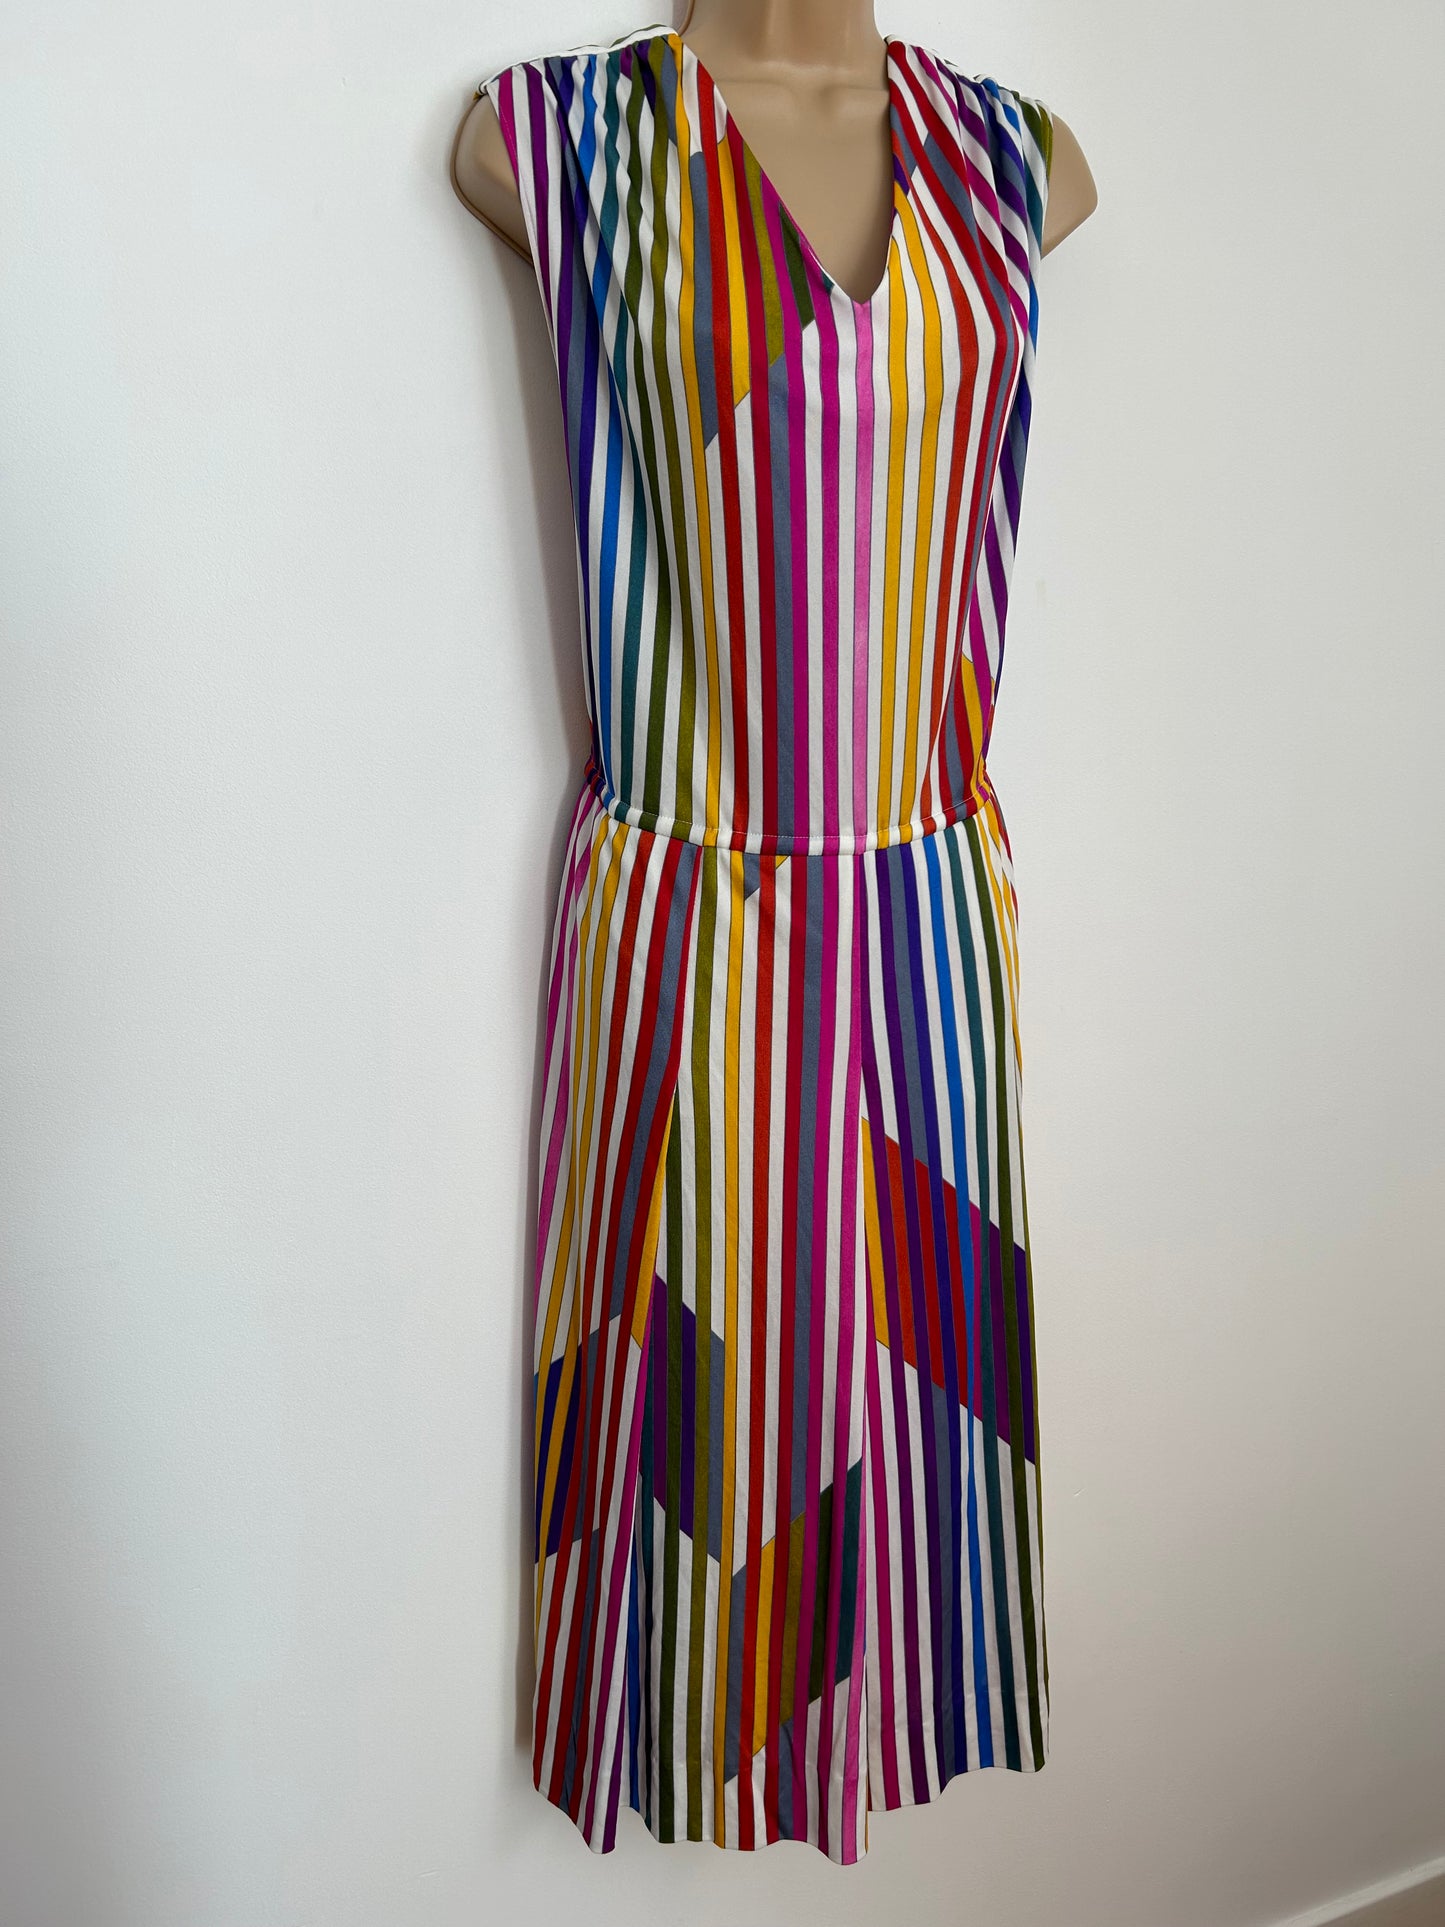 Vintage 1980s UK Size 16 Cute Rainbow Stripe Print Sleeveless Pleated Day Dress By Sommerfeldt